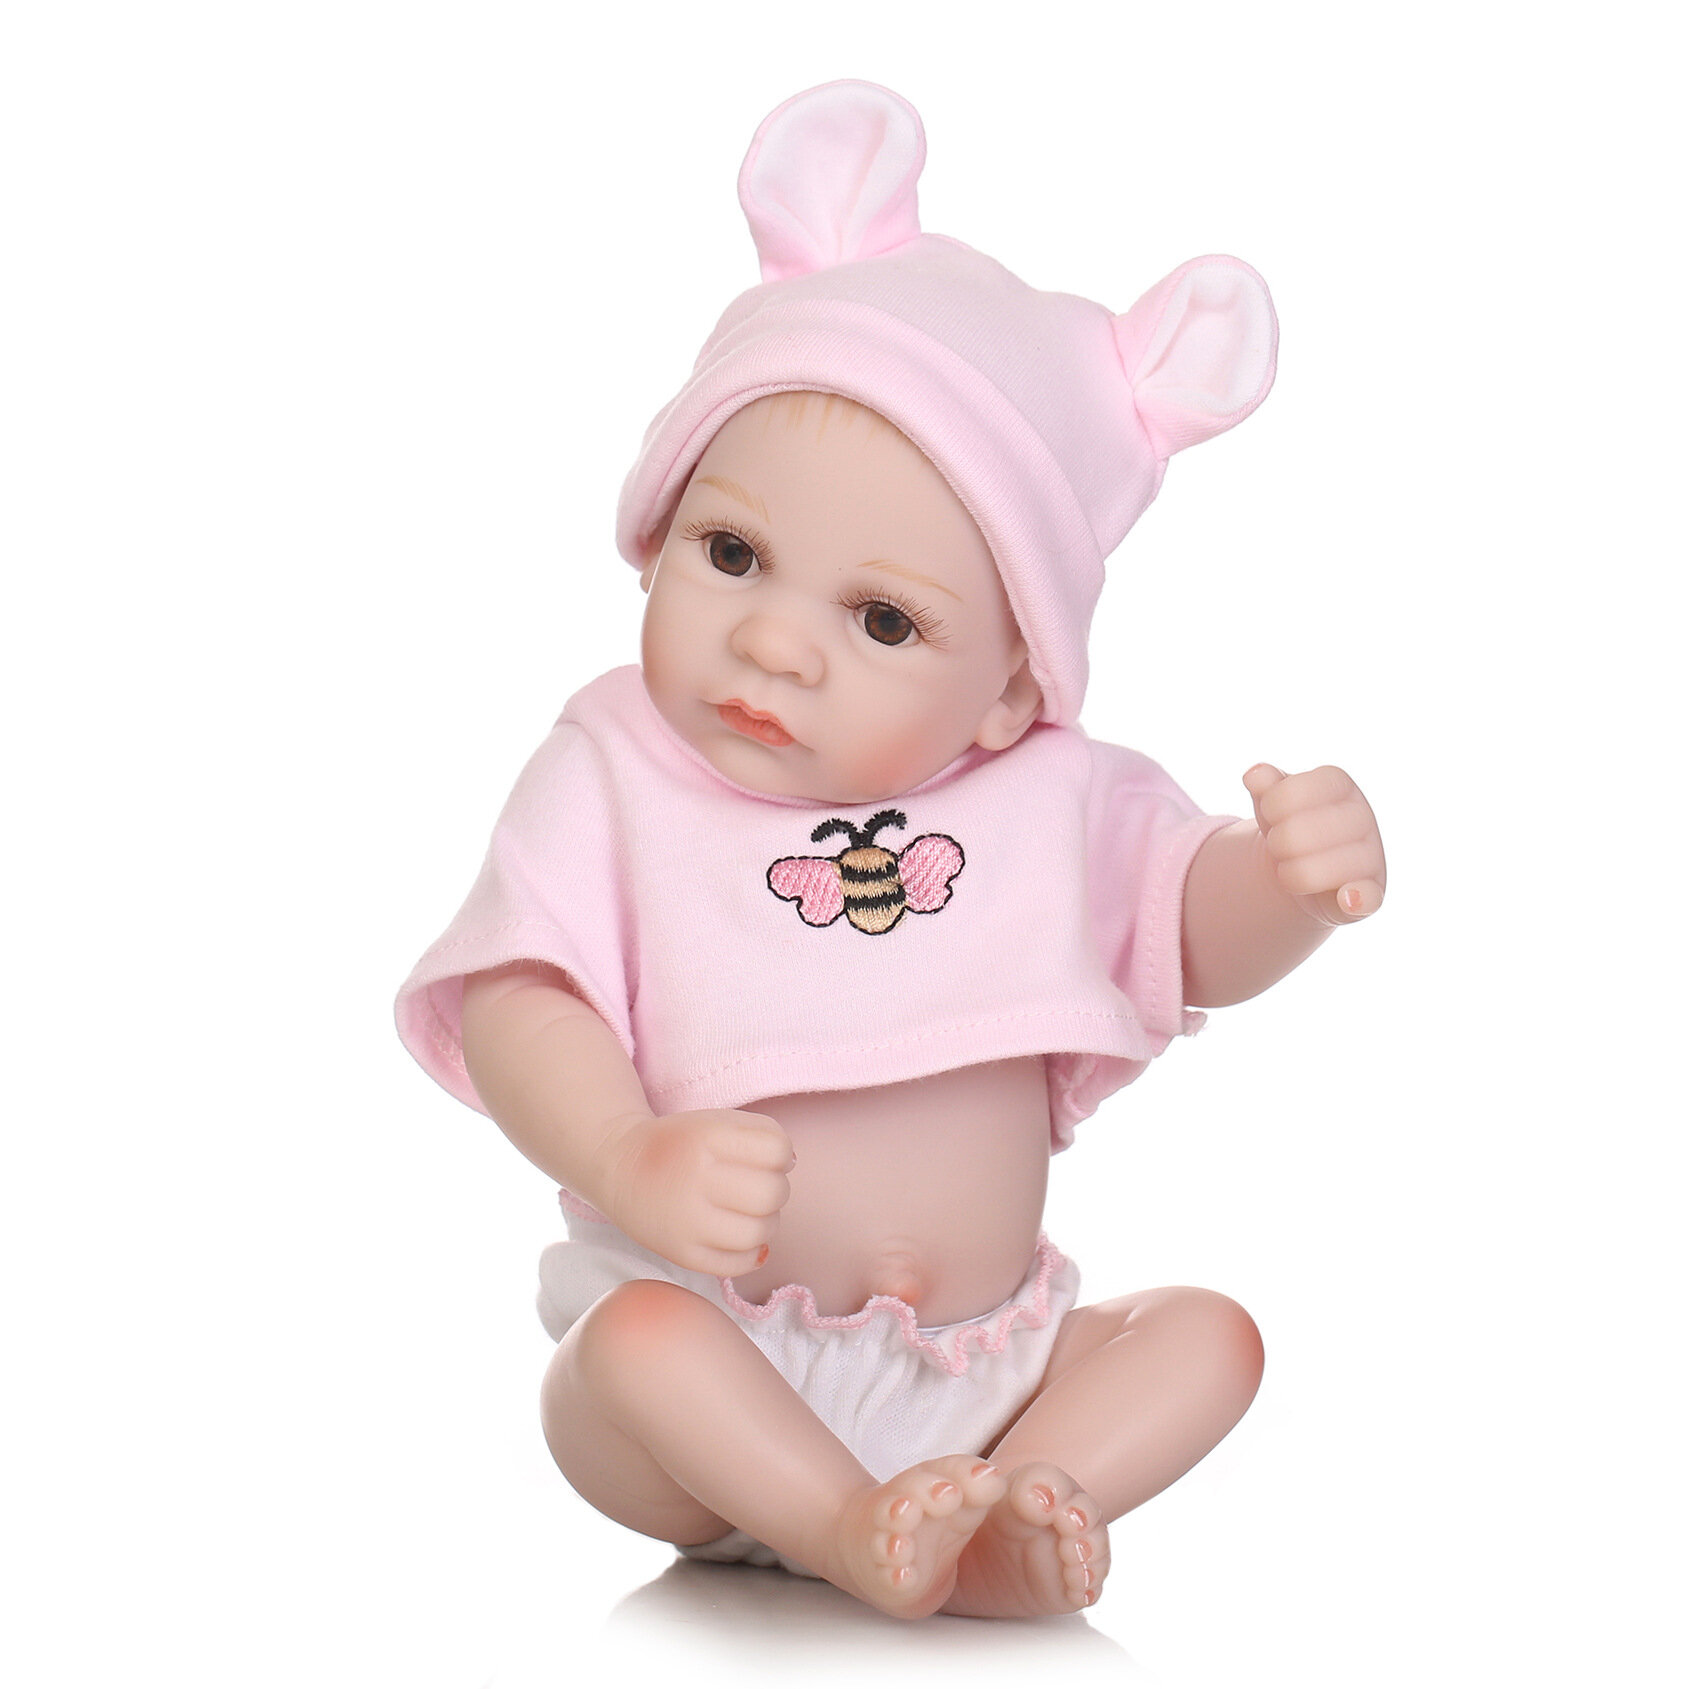 Children's Toy Gift Reborn Baby Dolls for Kids A12